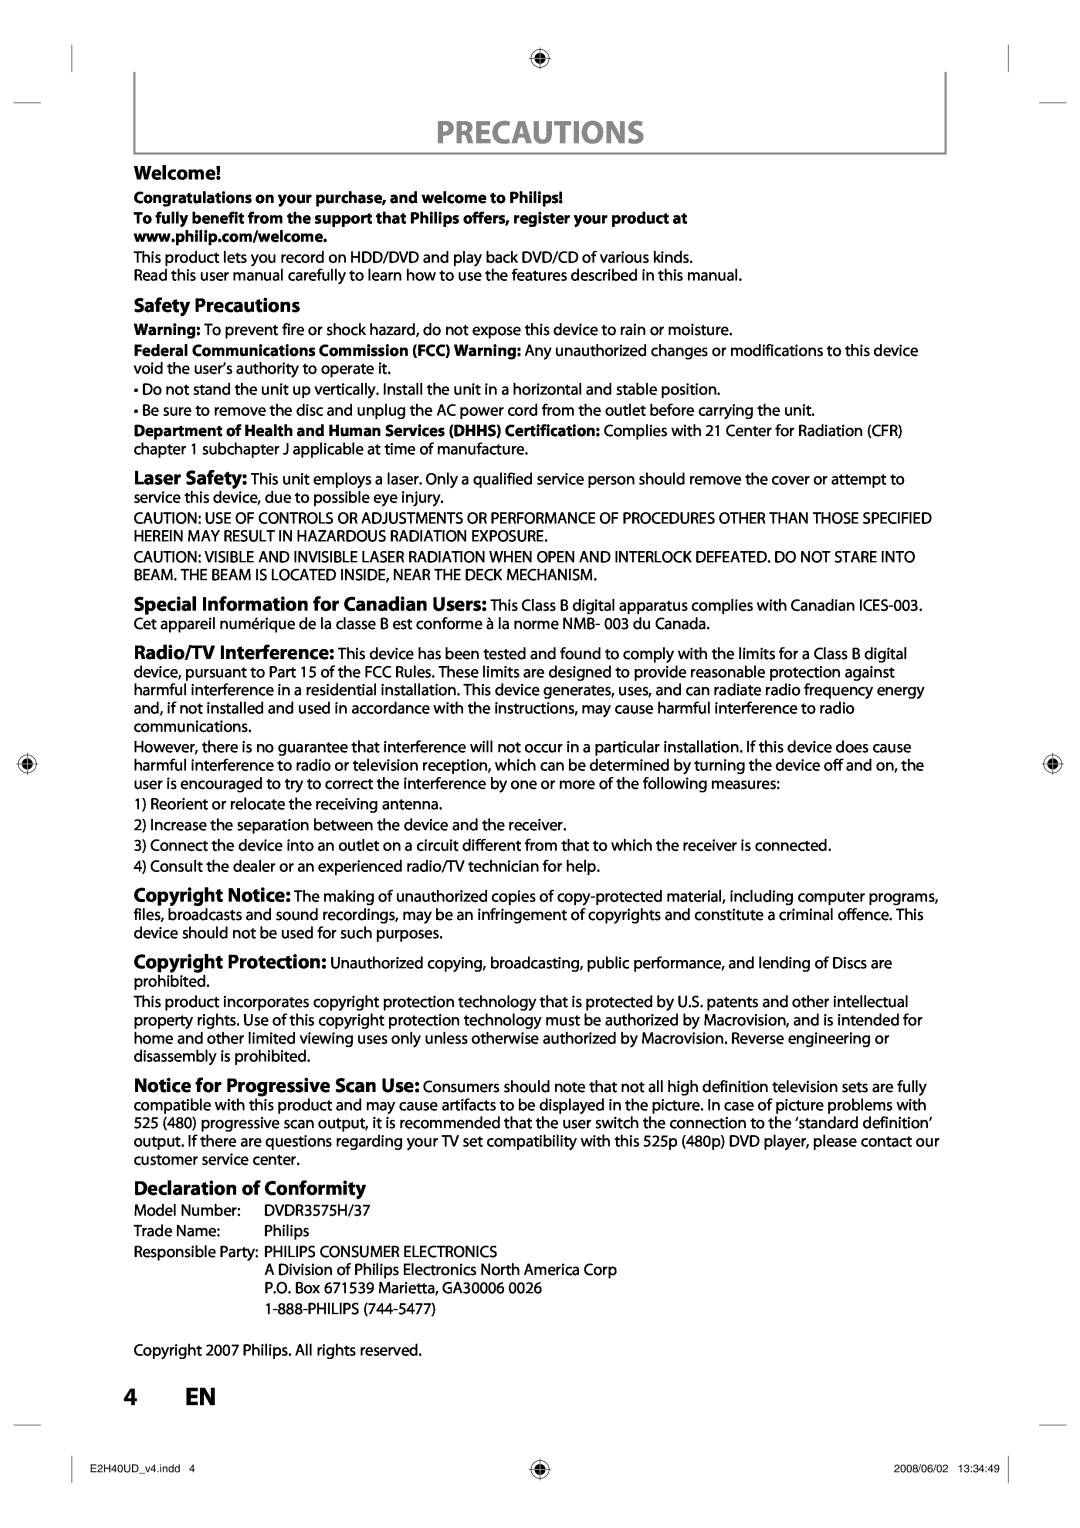 Philips DVDR3575H/37 manual 4 EN, Welcome, Safety Precautions, Declaration of Conformity 